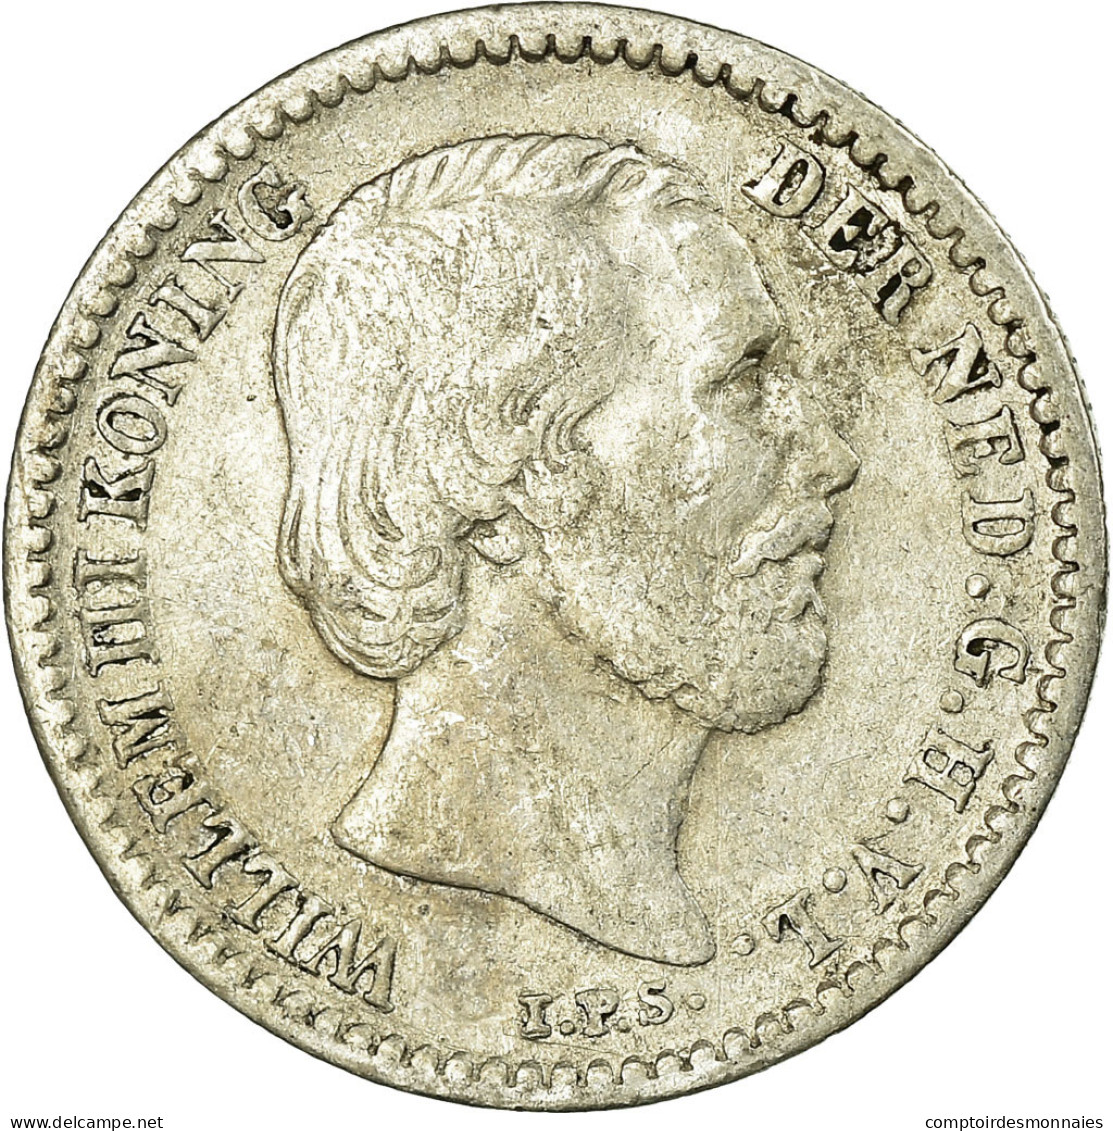 Monnaie, Pays-Bas, William III, 10 Cents, 1862, TTB, Argent, KM:80 - 1849-1890 : Willem III